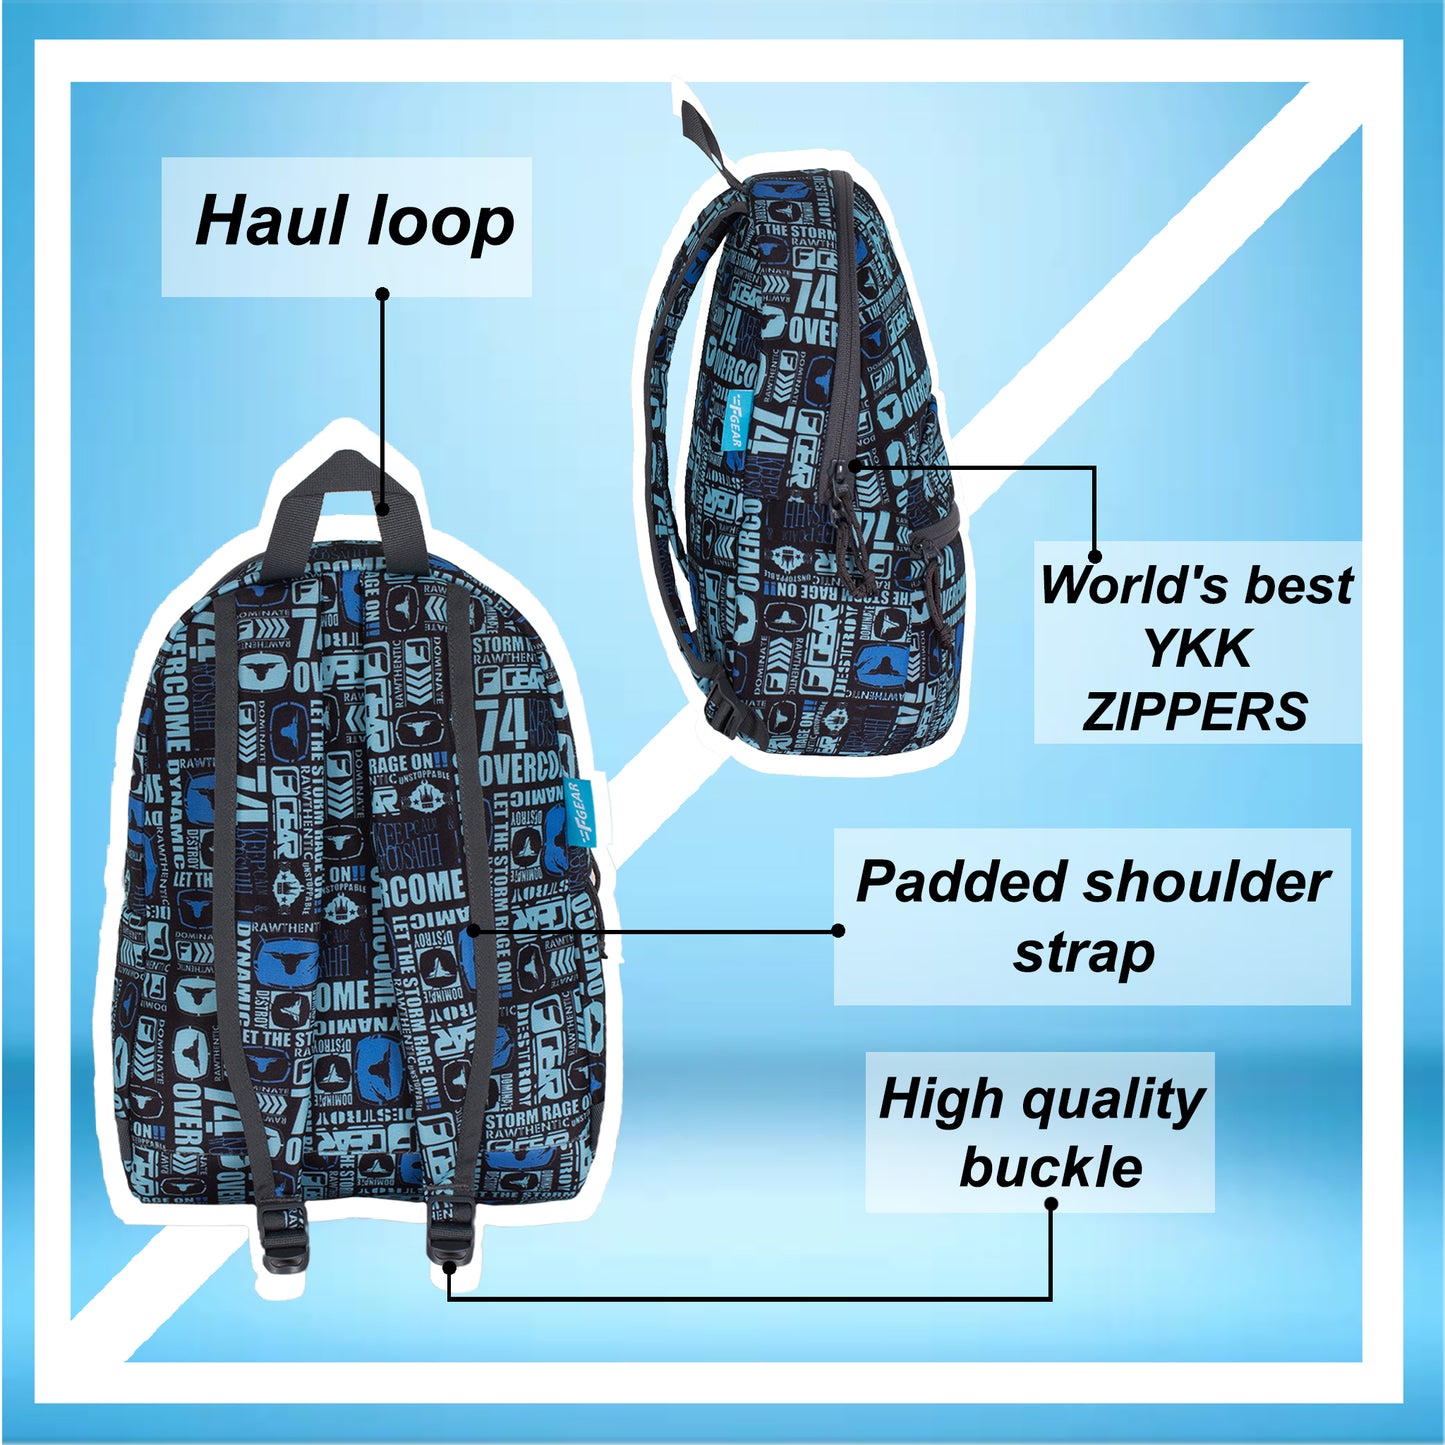 Ferris 7L P11 Blue Backpack